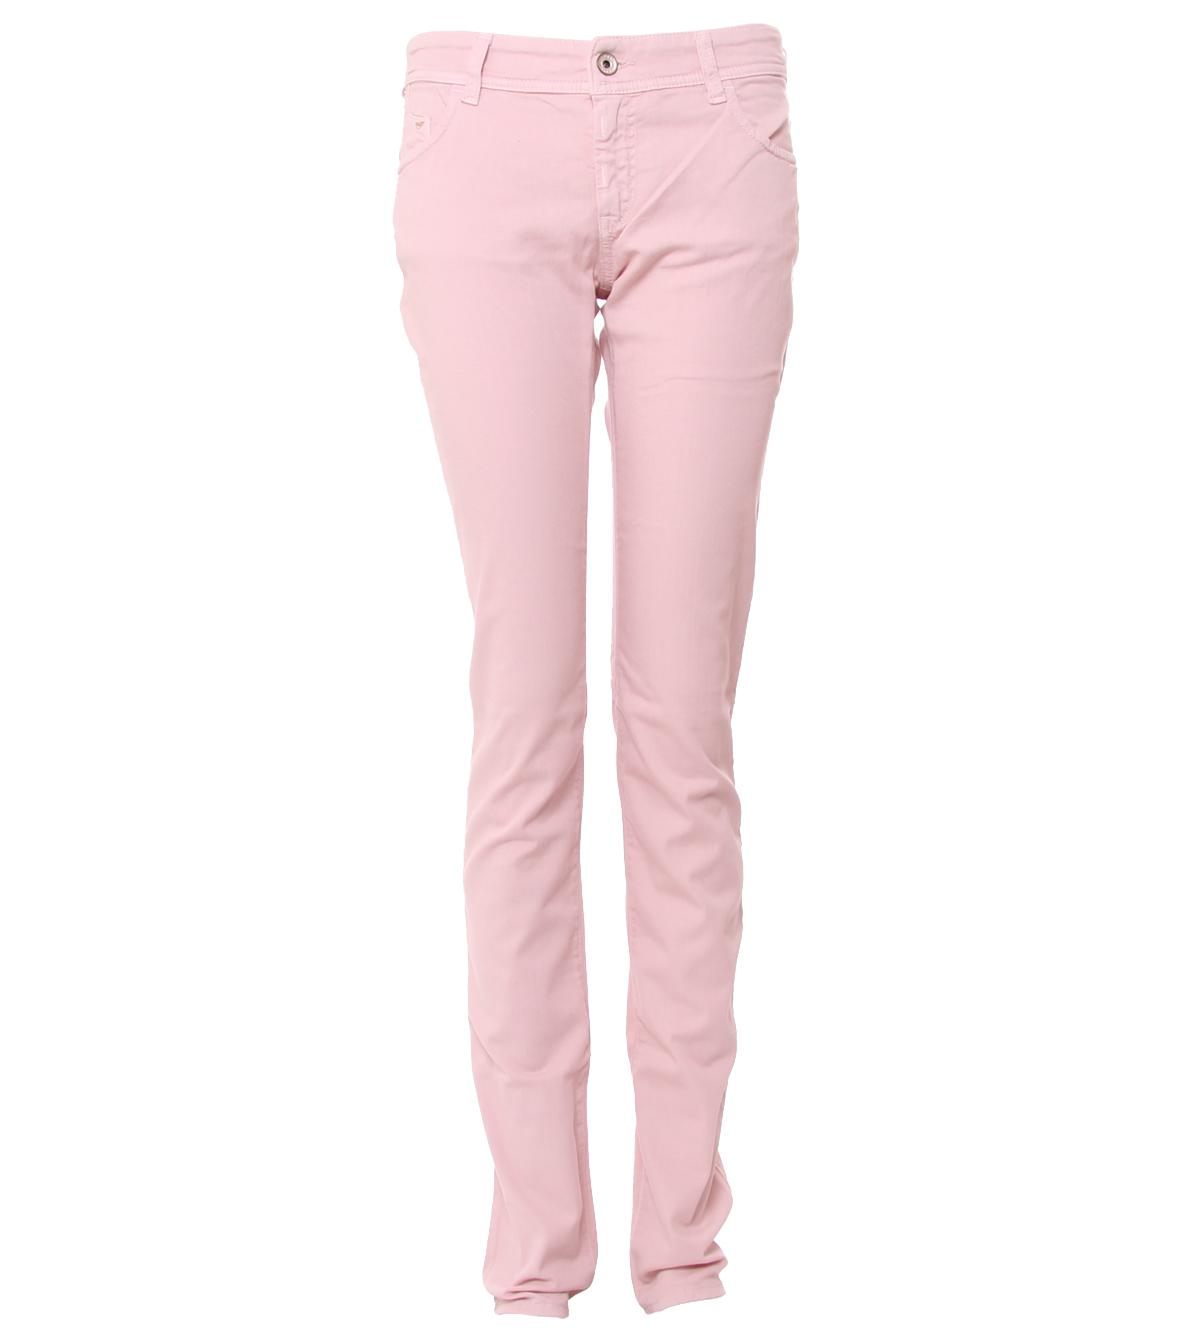 Foto Armani Jeans Light Pink Skinny Stretch Jeans foto 194089